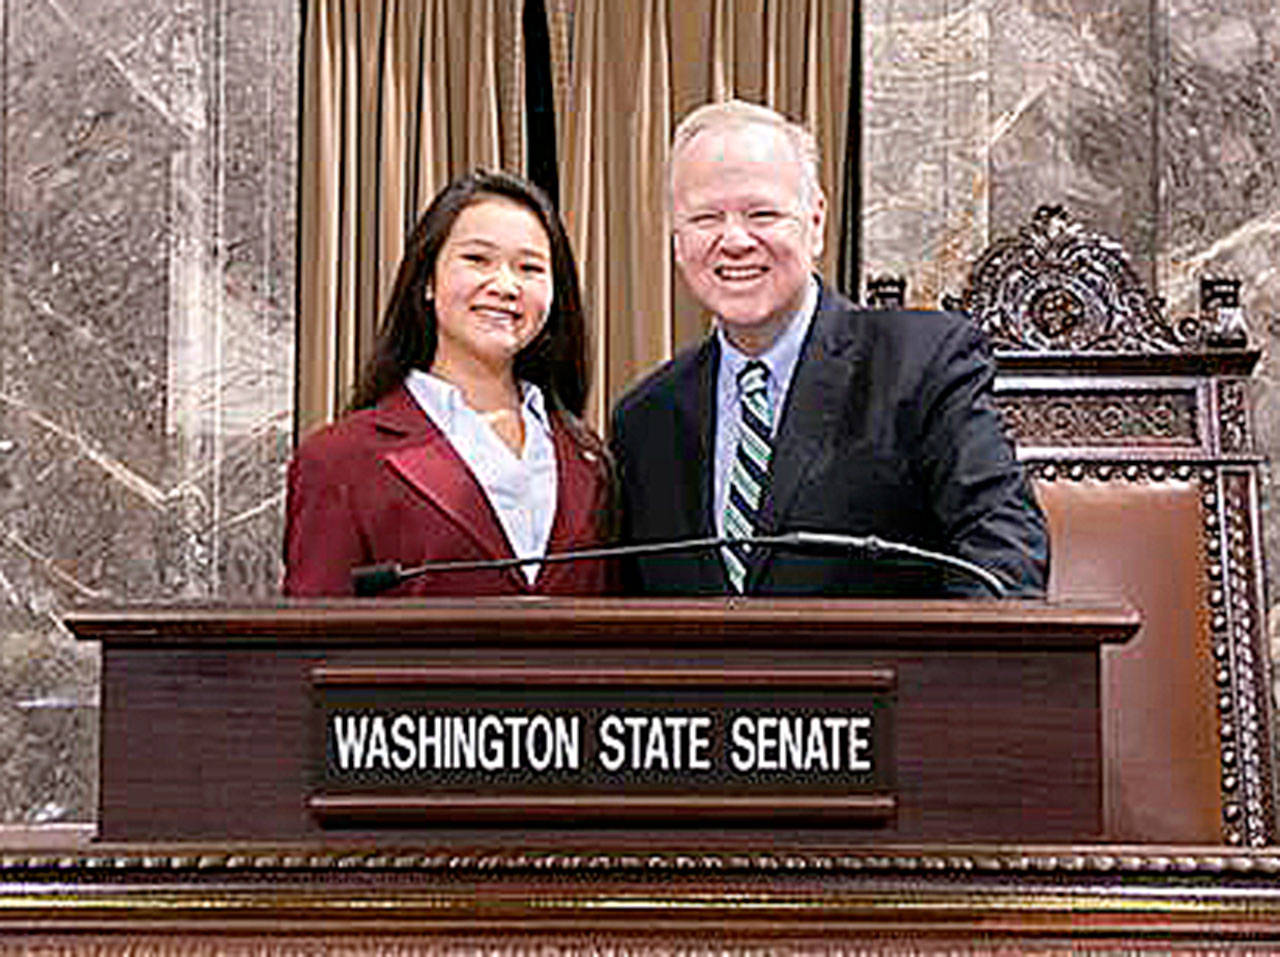 Nina Horn of North Bend serves as page to Secretary of Washington State Senate